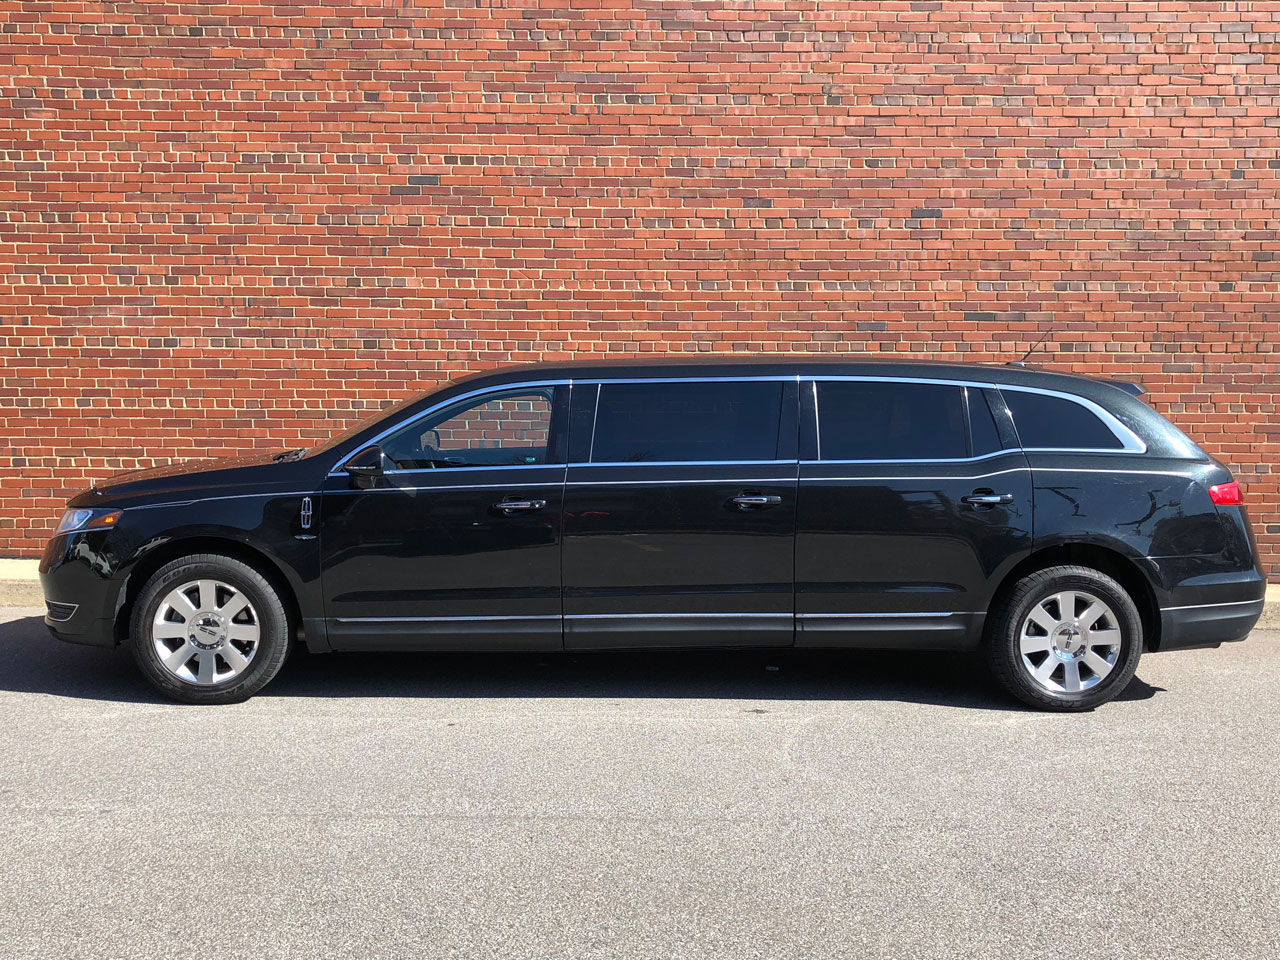 2019 Eagle Coach Company Lincoln MKT Regency Limousine 4